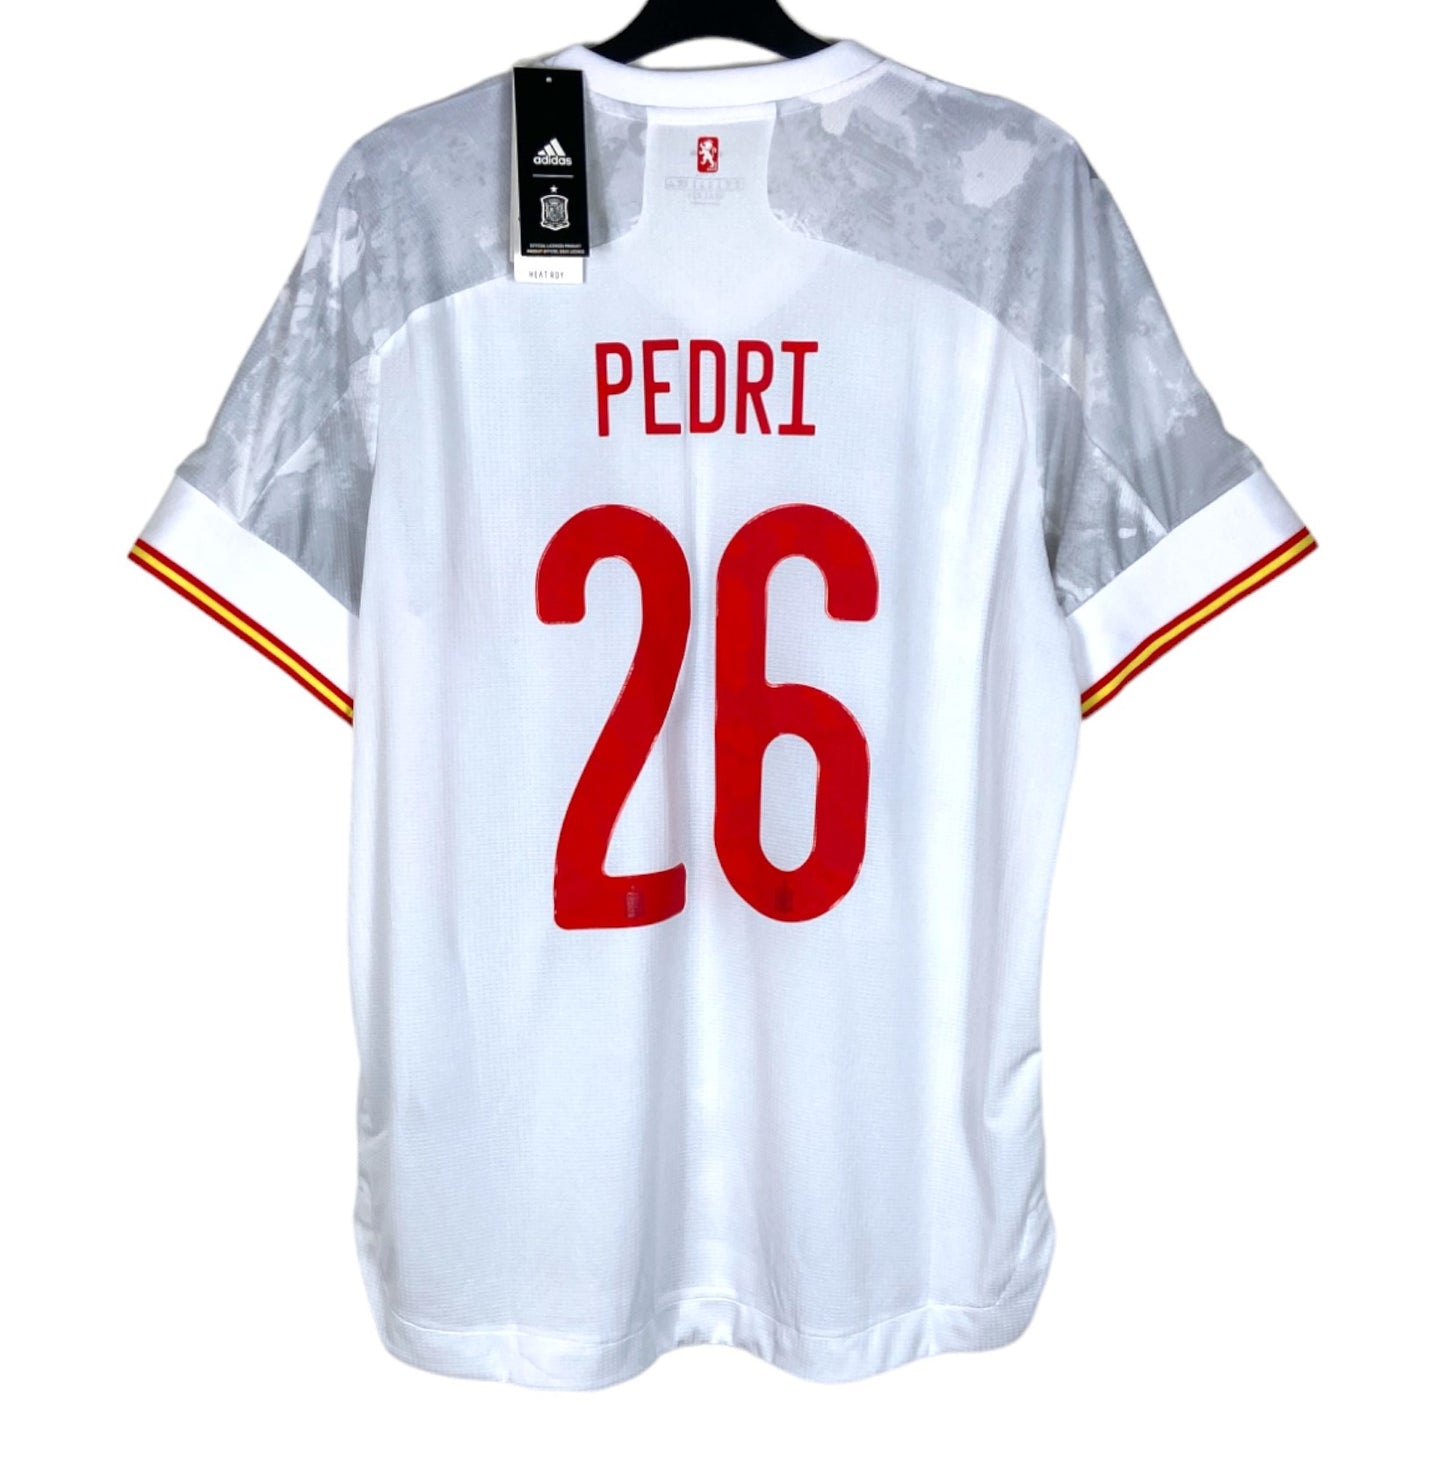 BNWT 2020 2021 Spain Adidas Away Player Issue Football Shirt PEDRI 26 Men's XL